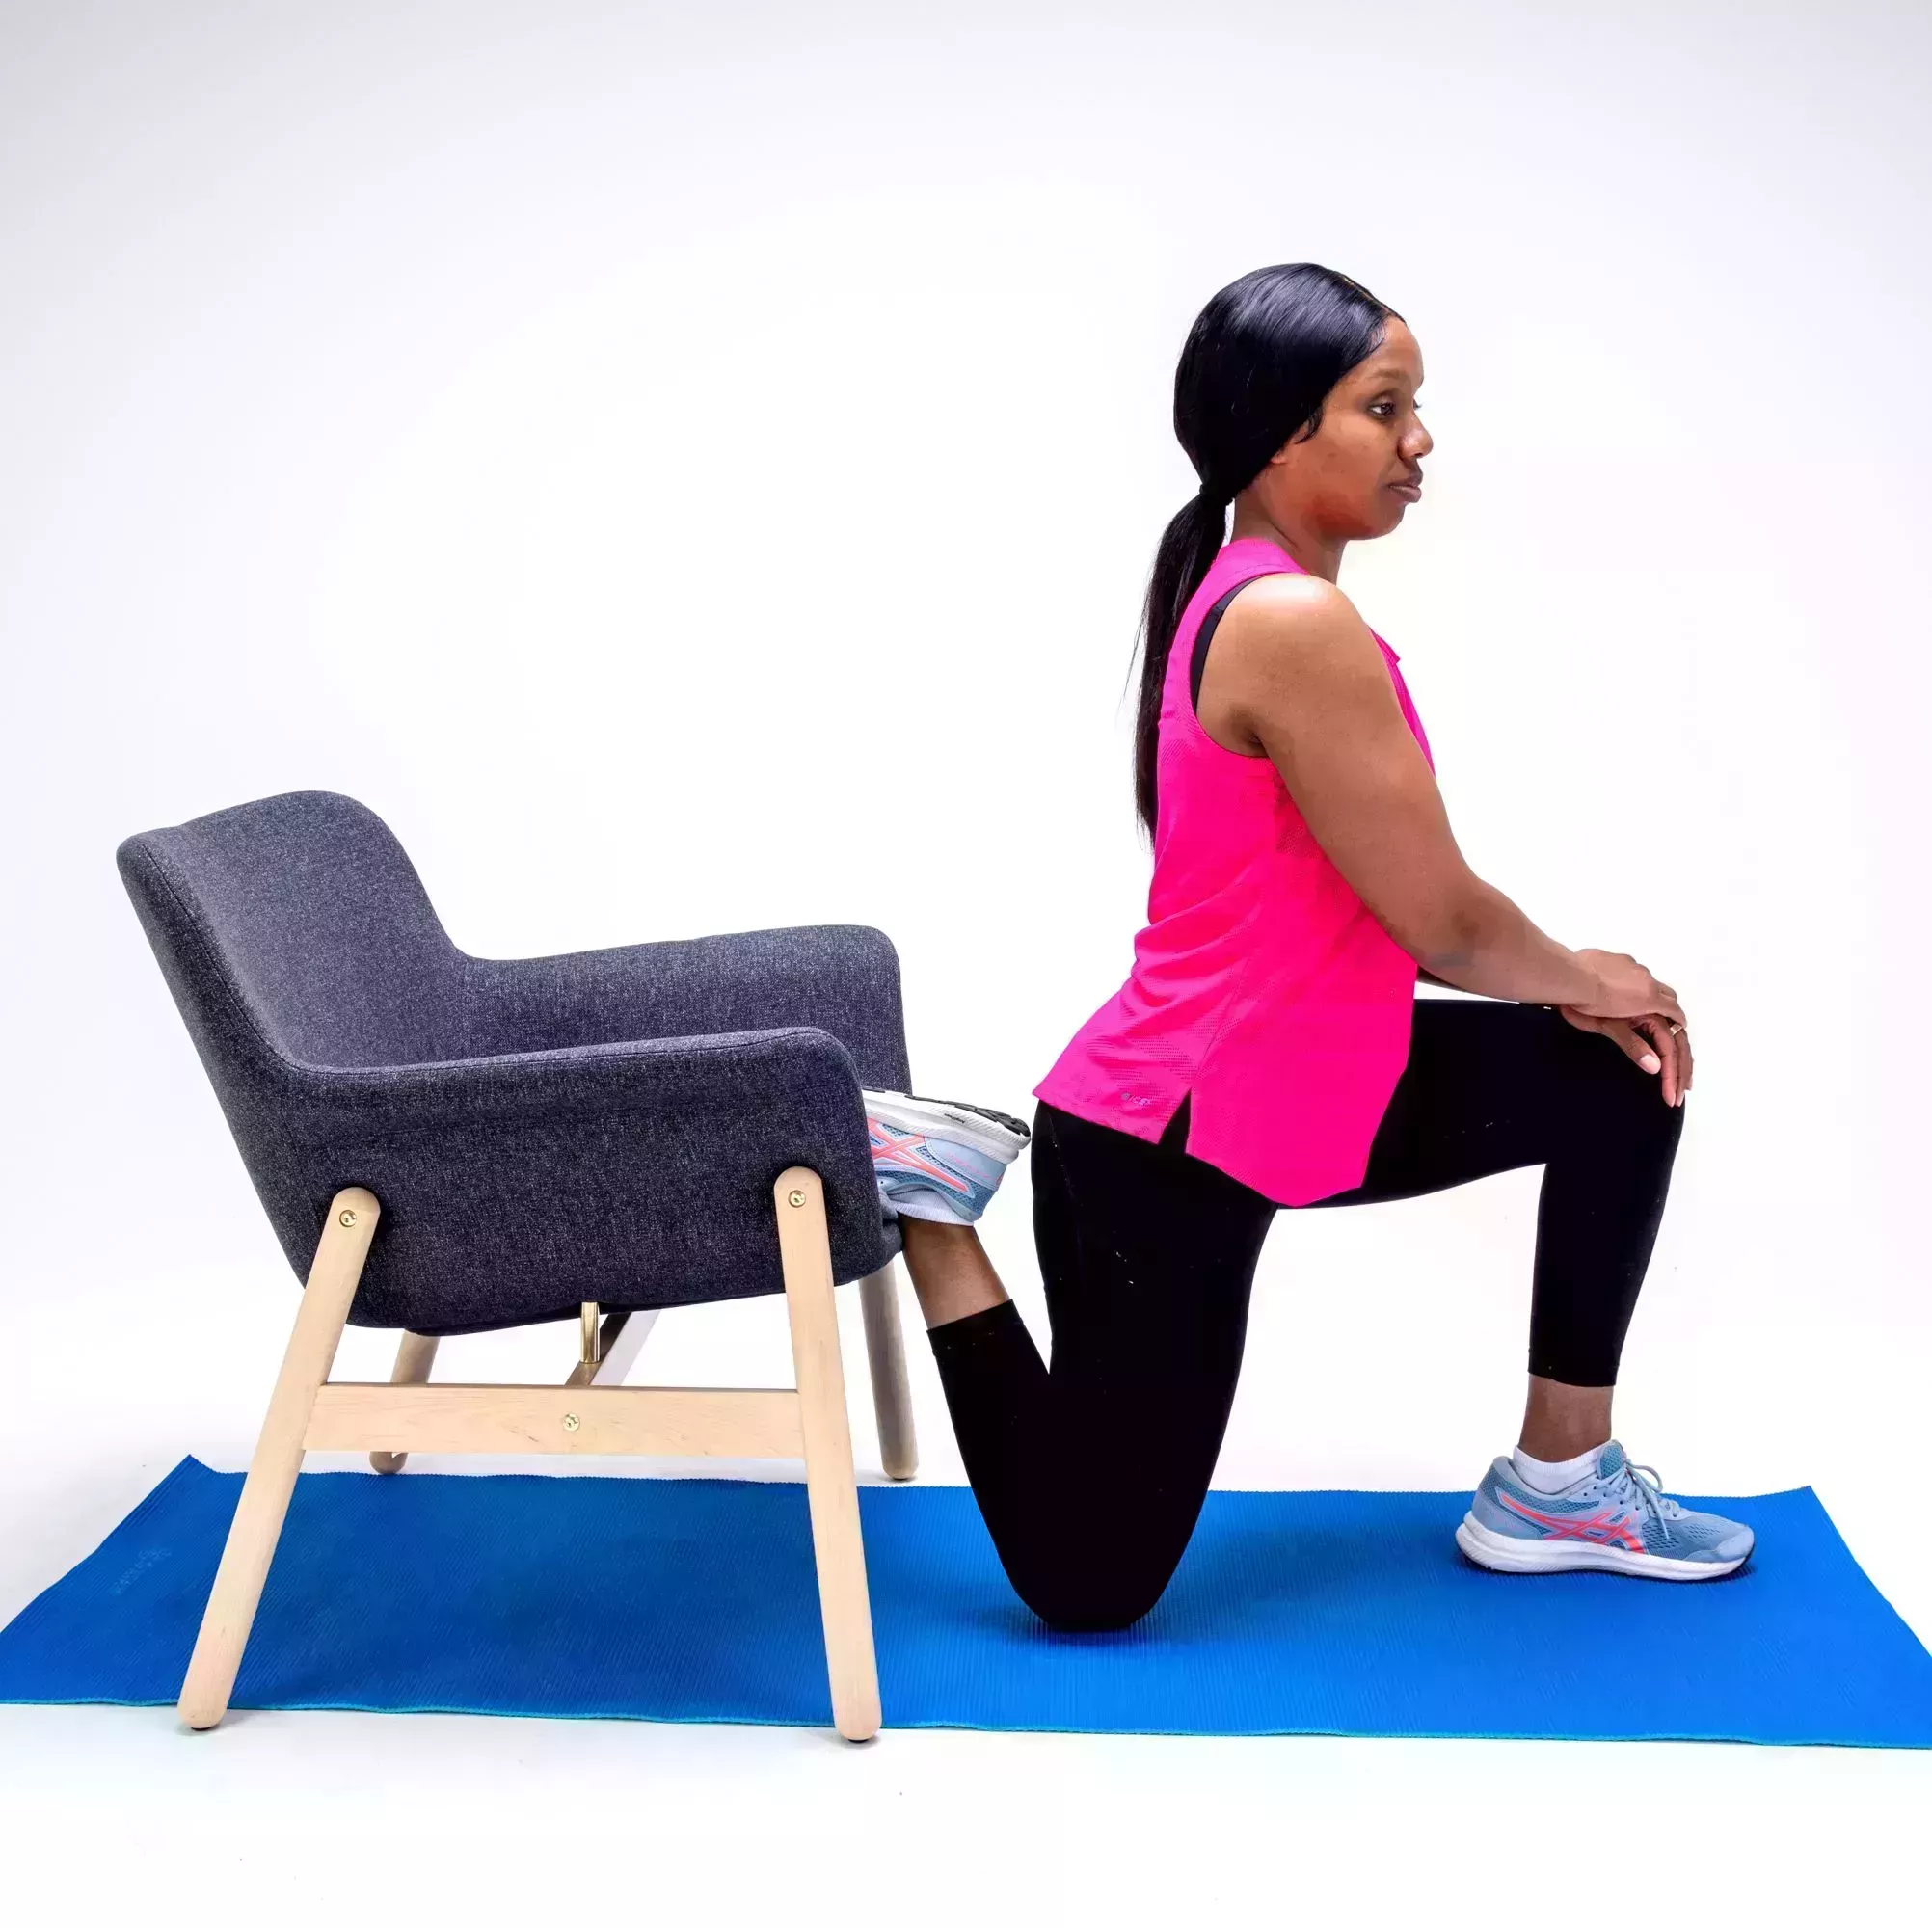 couch stretch for hip flexor relief